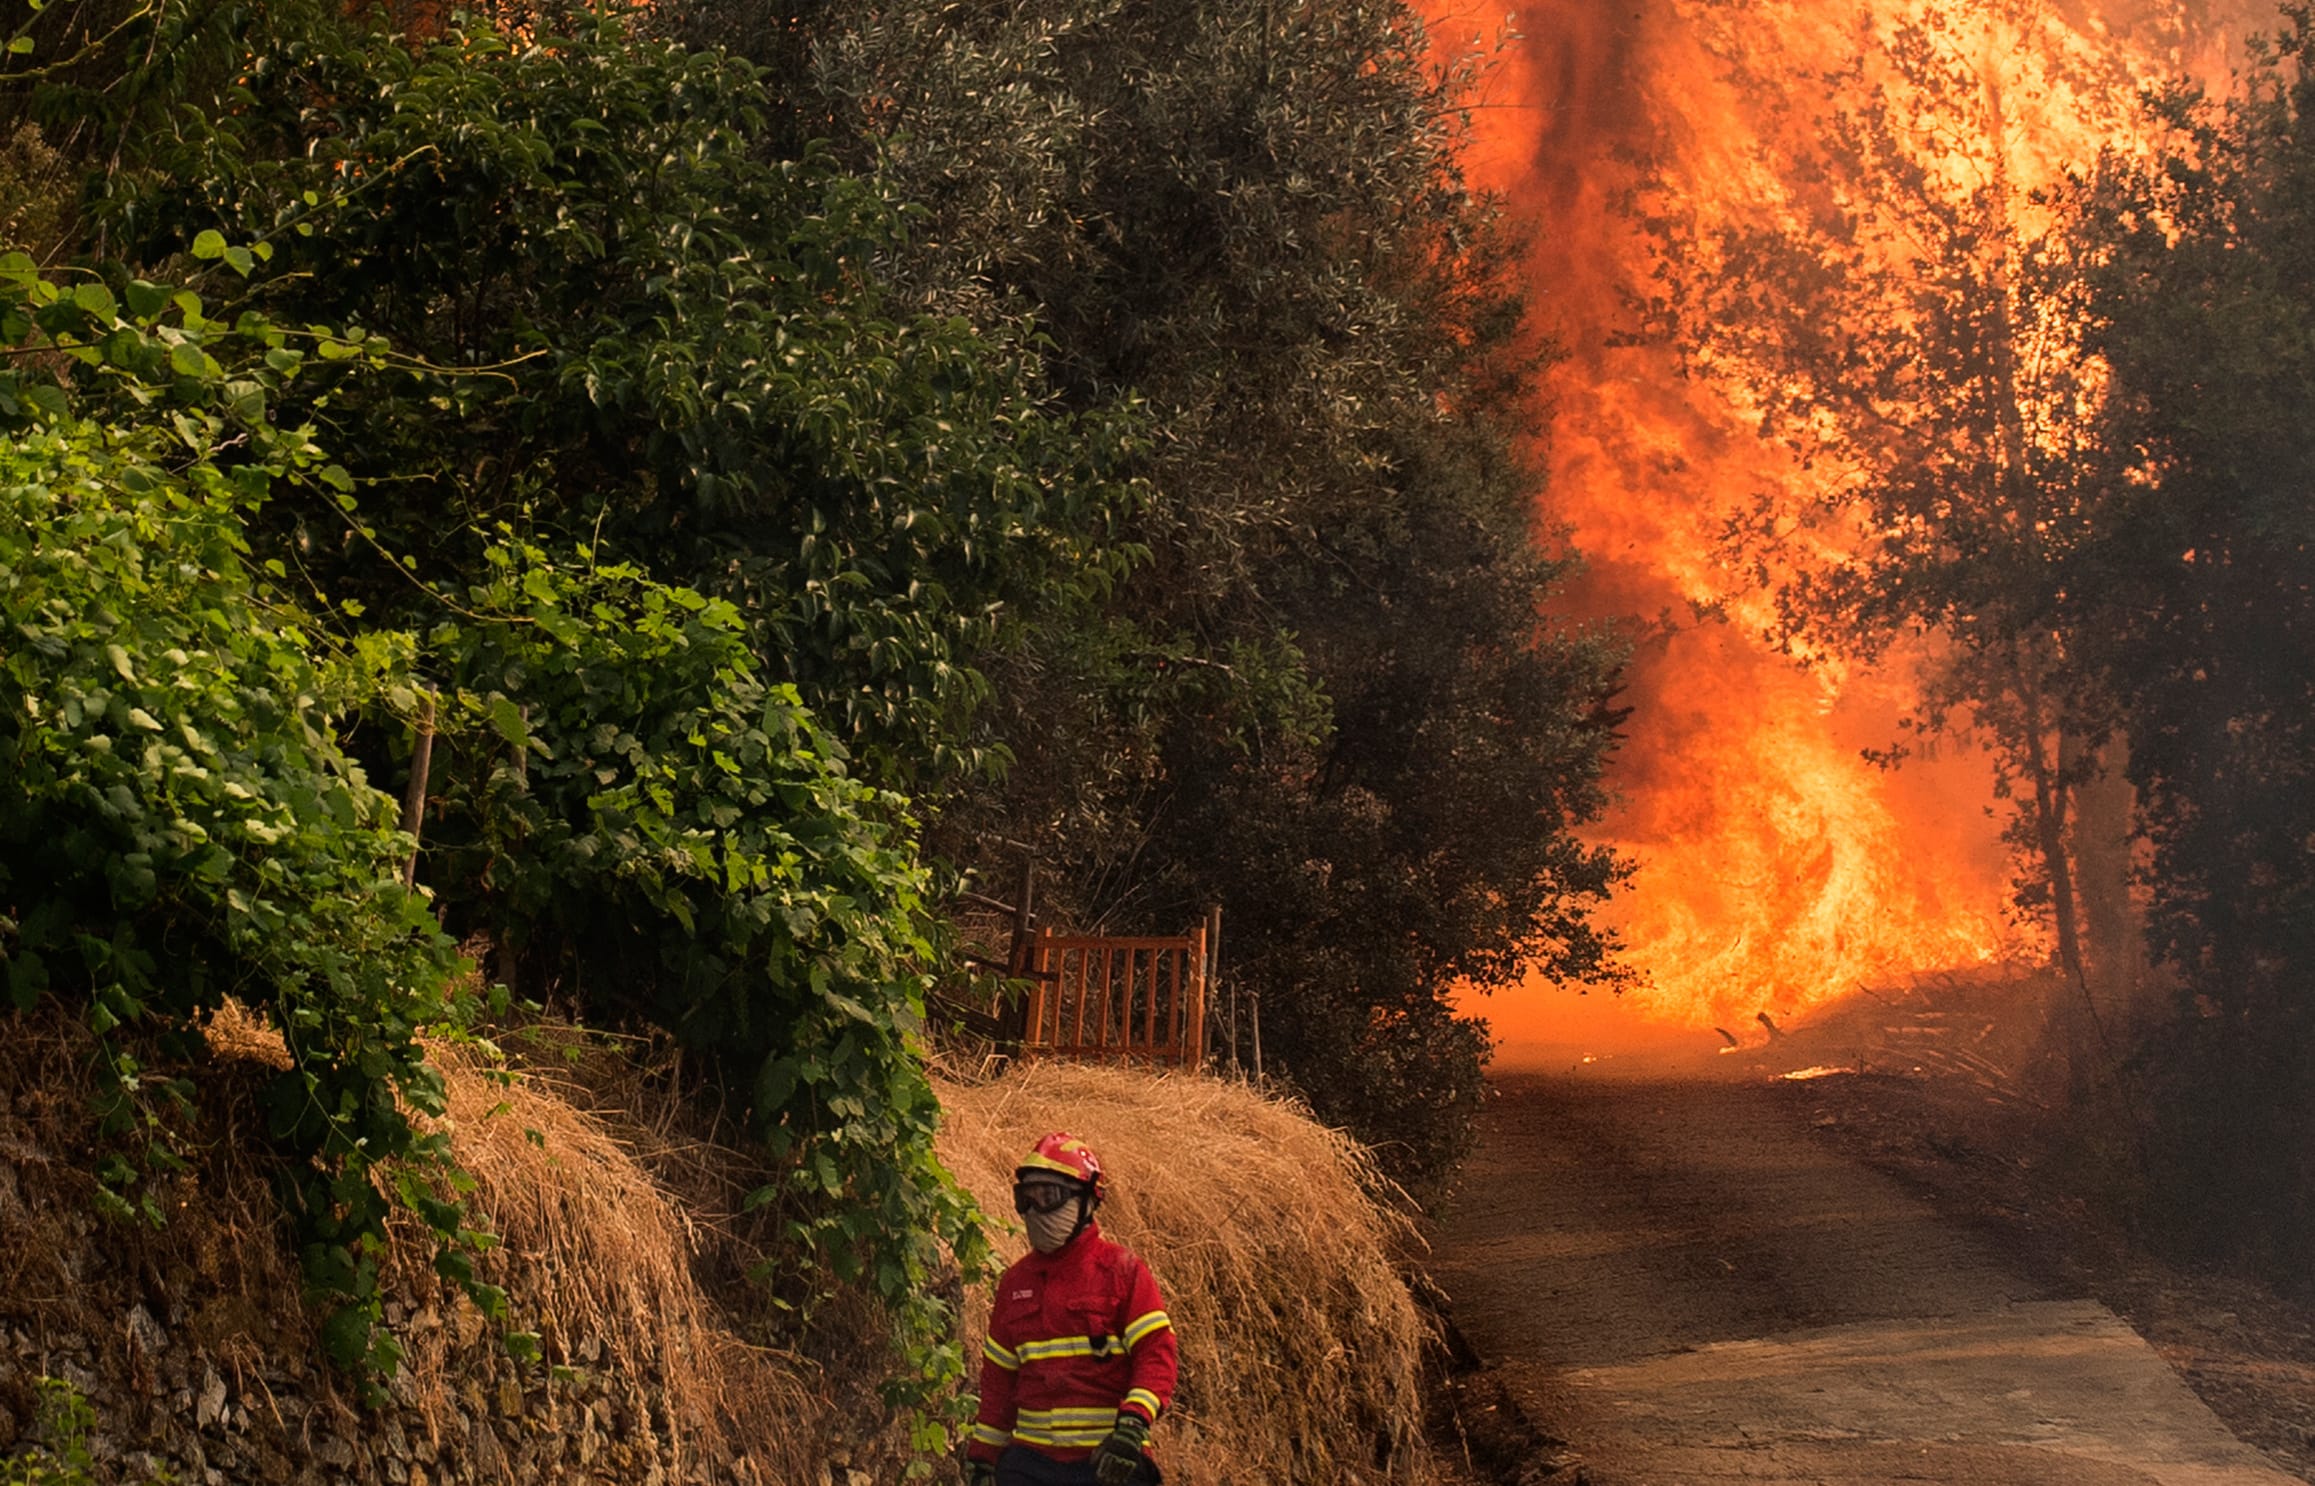 A firefighter walks close to a wildfire in Carvalho, near Pampilhosa da Serra, on June 19, 2017.